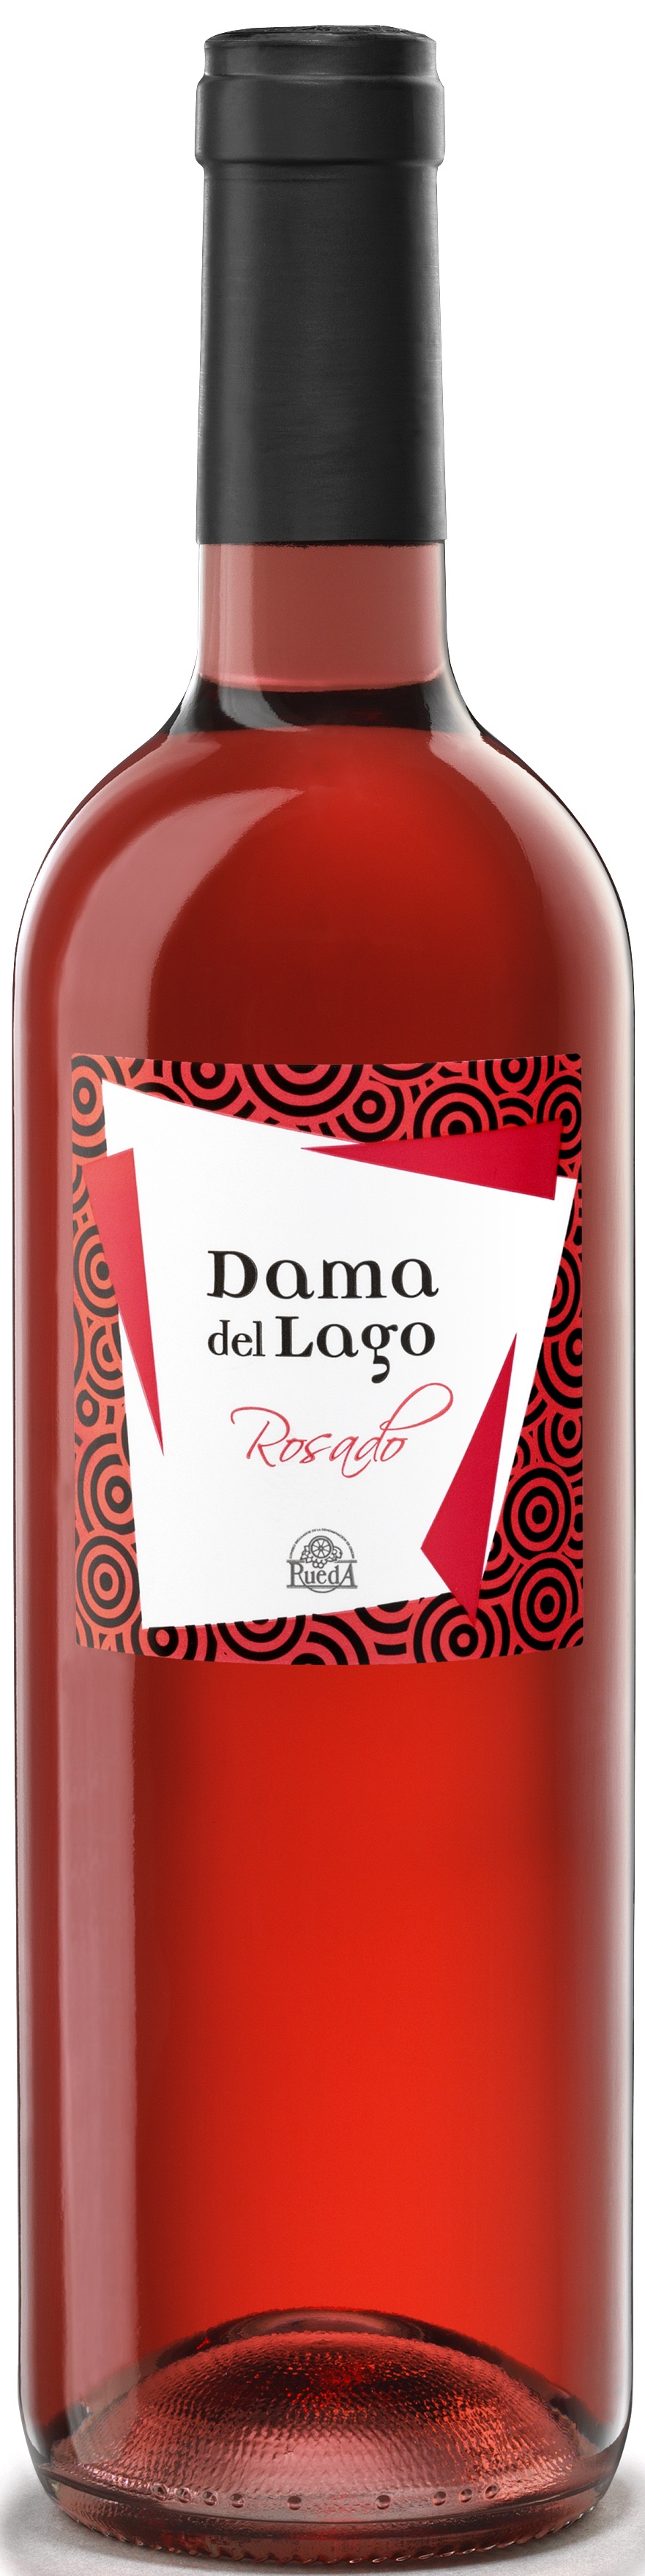 Image of Wine bottle Dama del Lago Rosado